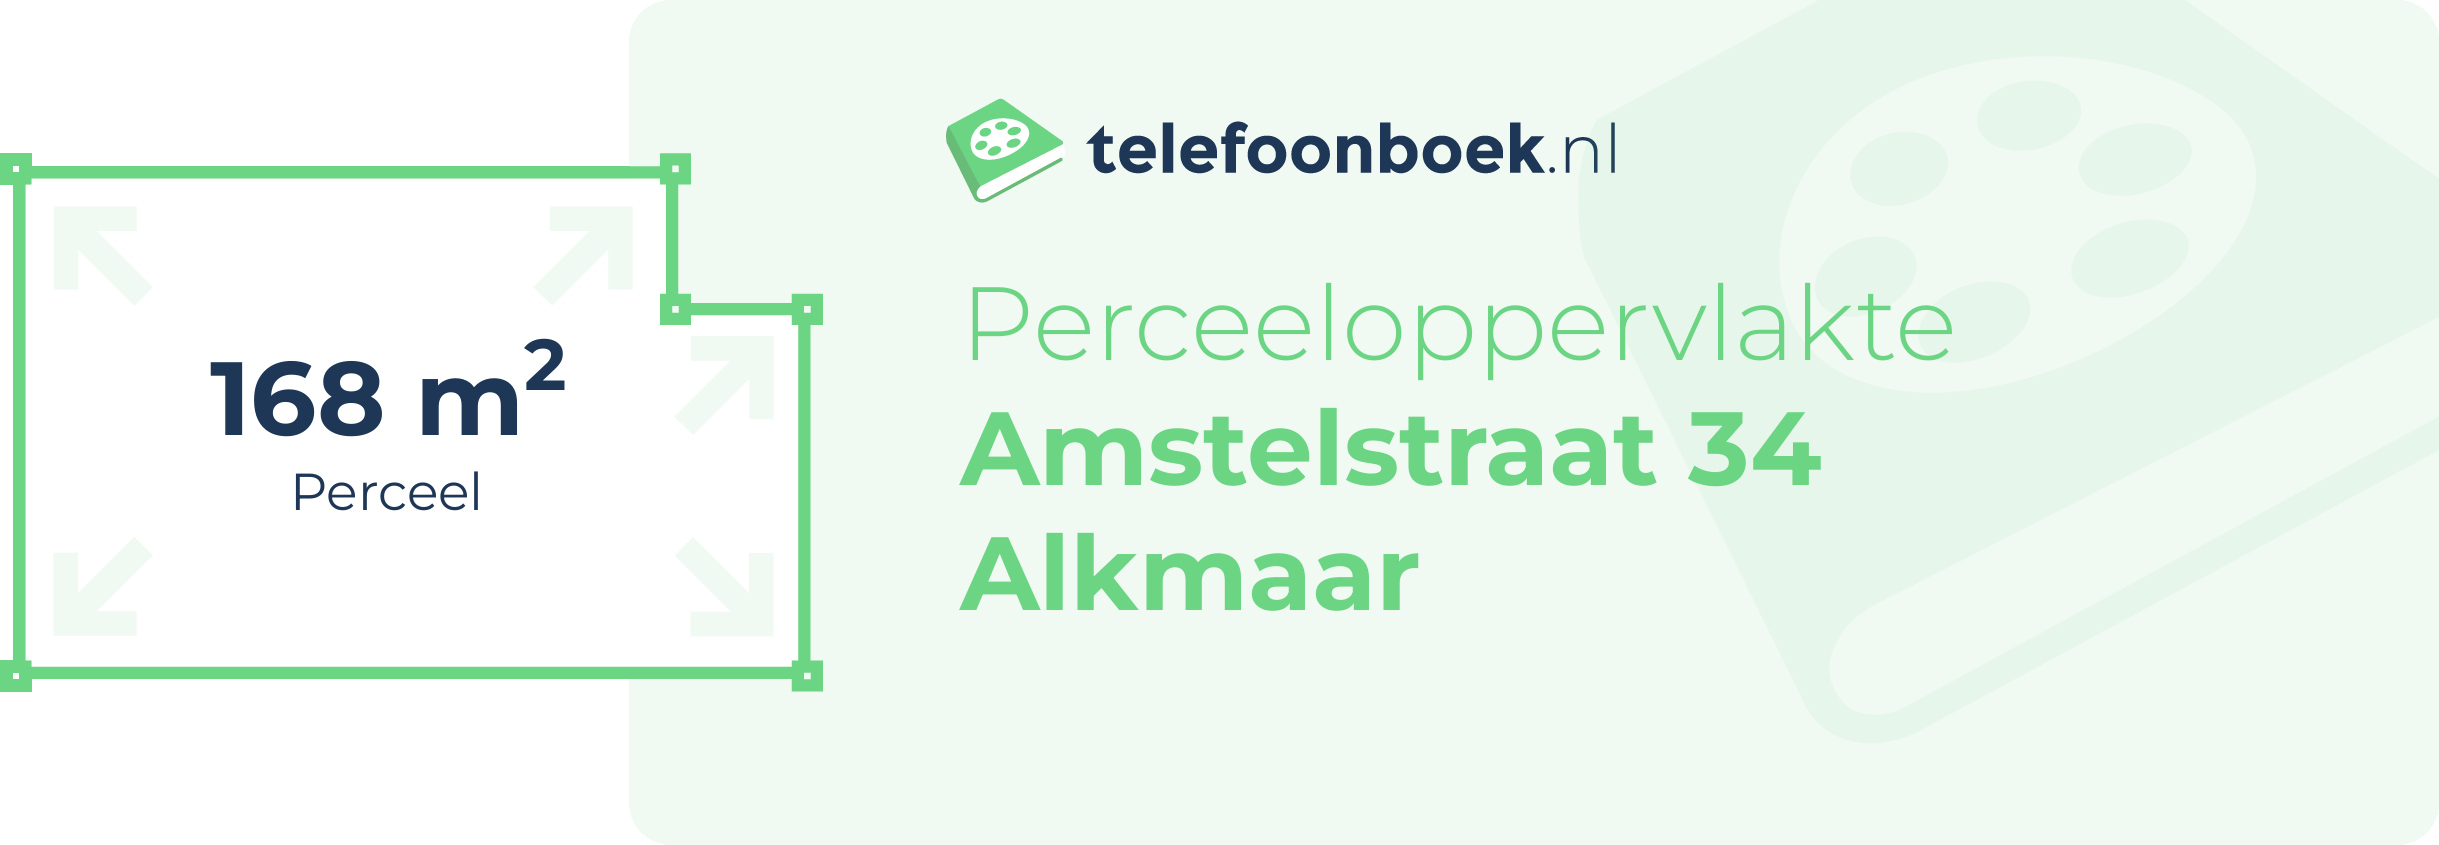 Perceeloppervlakte Amstelstraat 34 Alkmaar